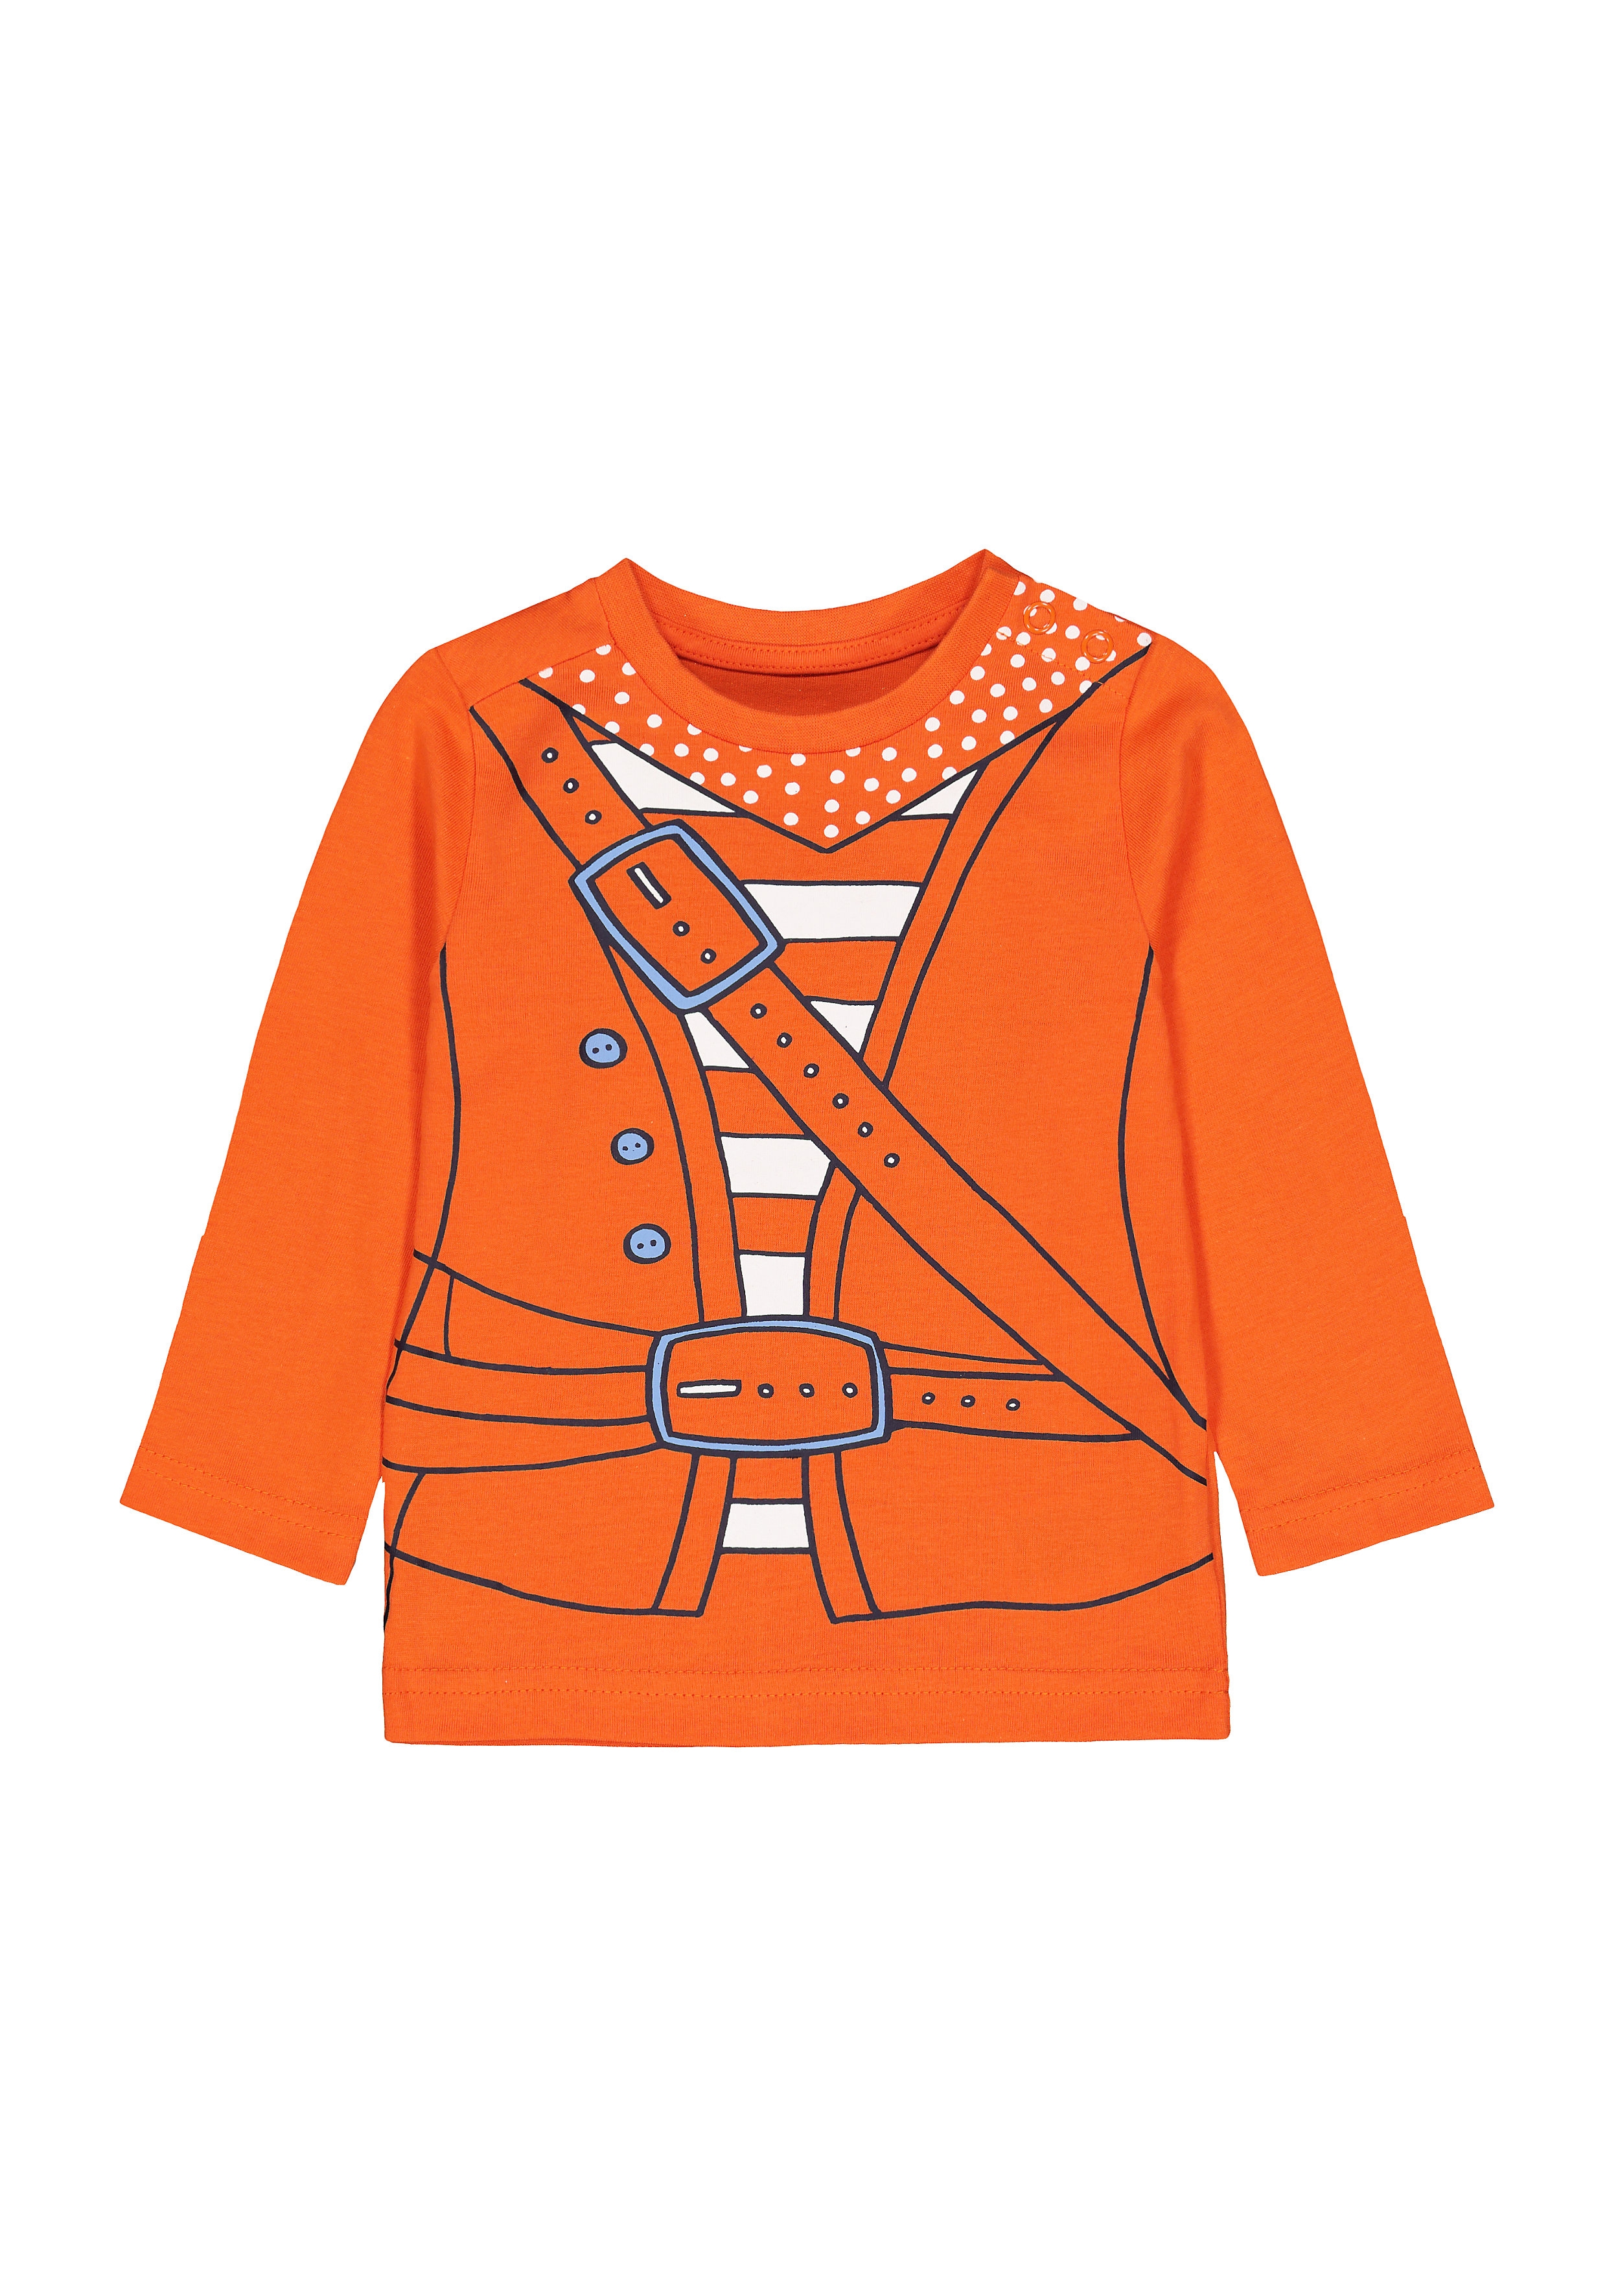 Mothercare | Boys Full Sleeves T-Shirt Pirate Dress Up - Orange